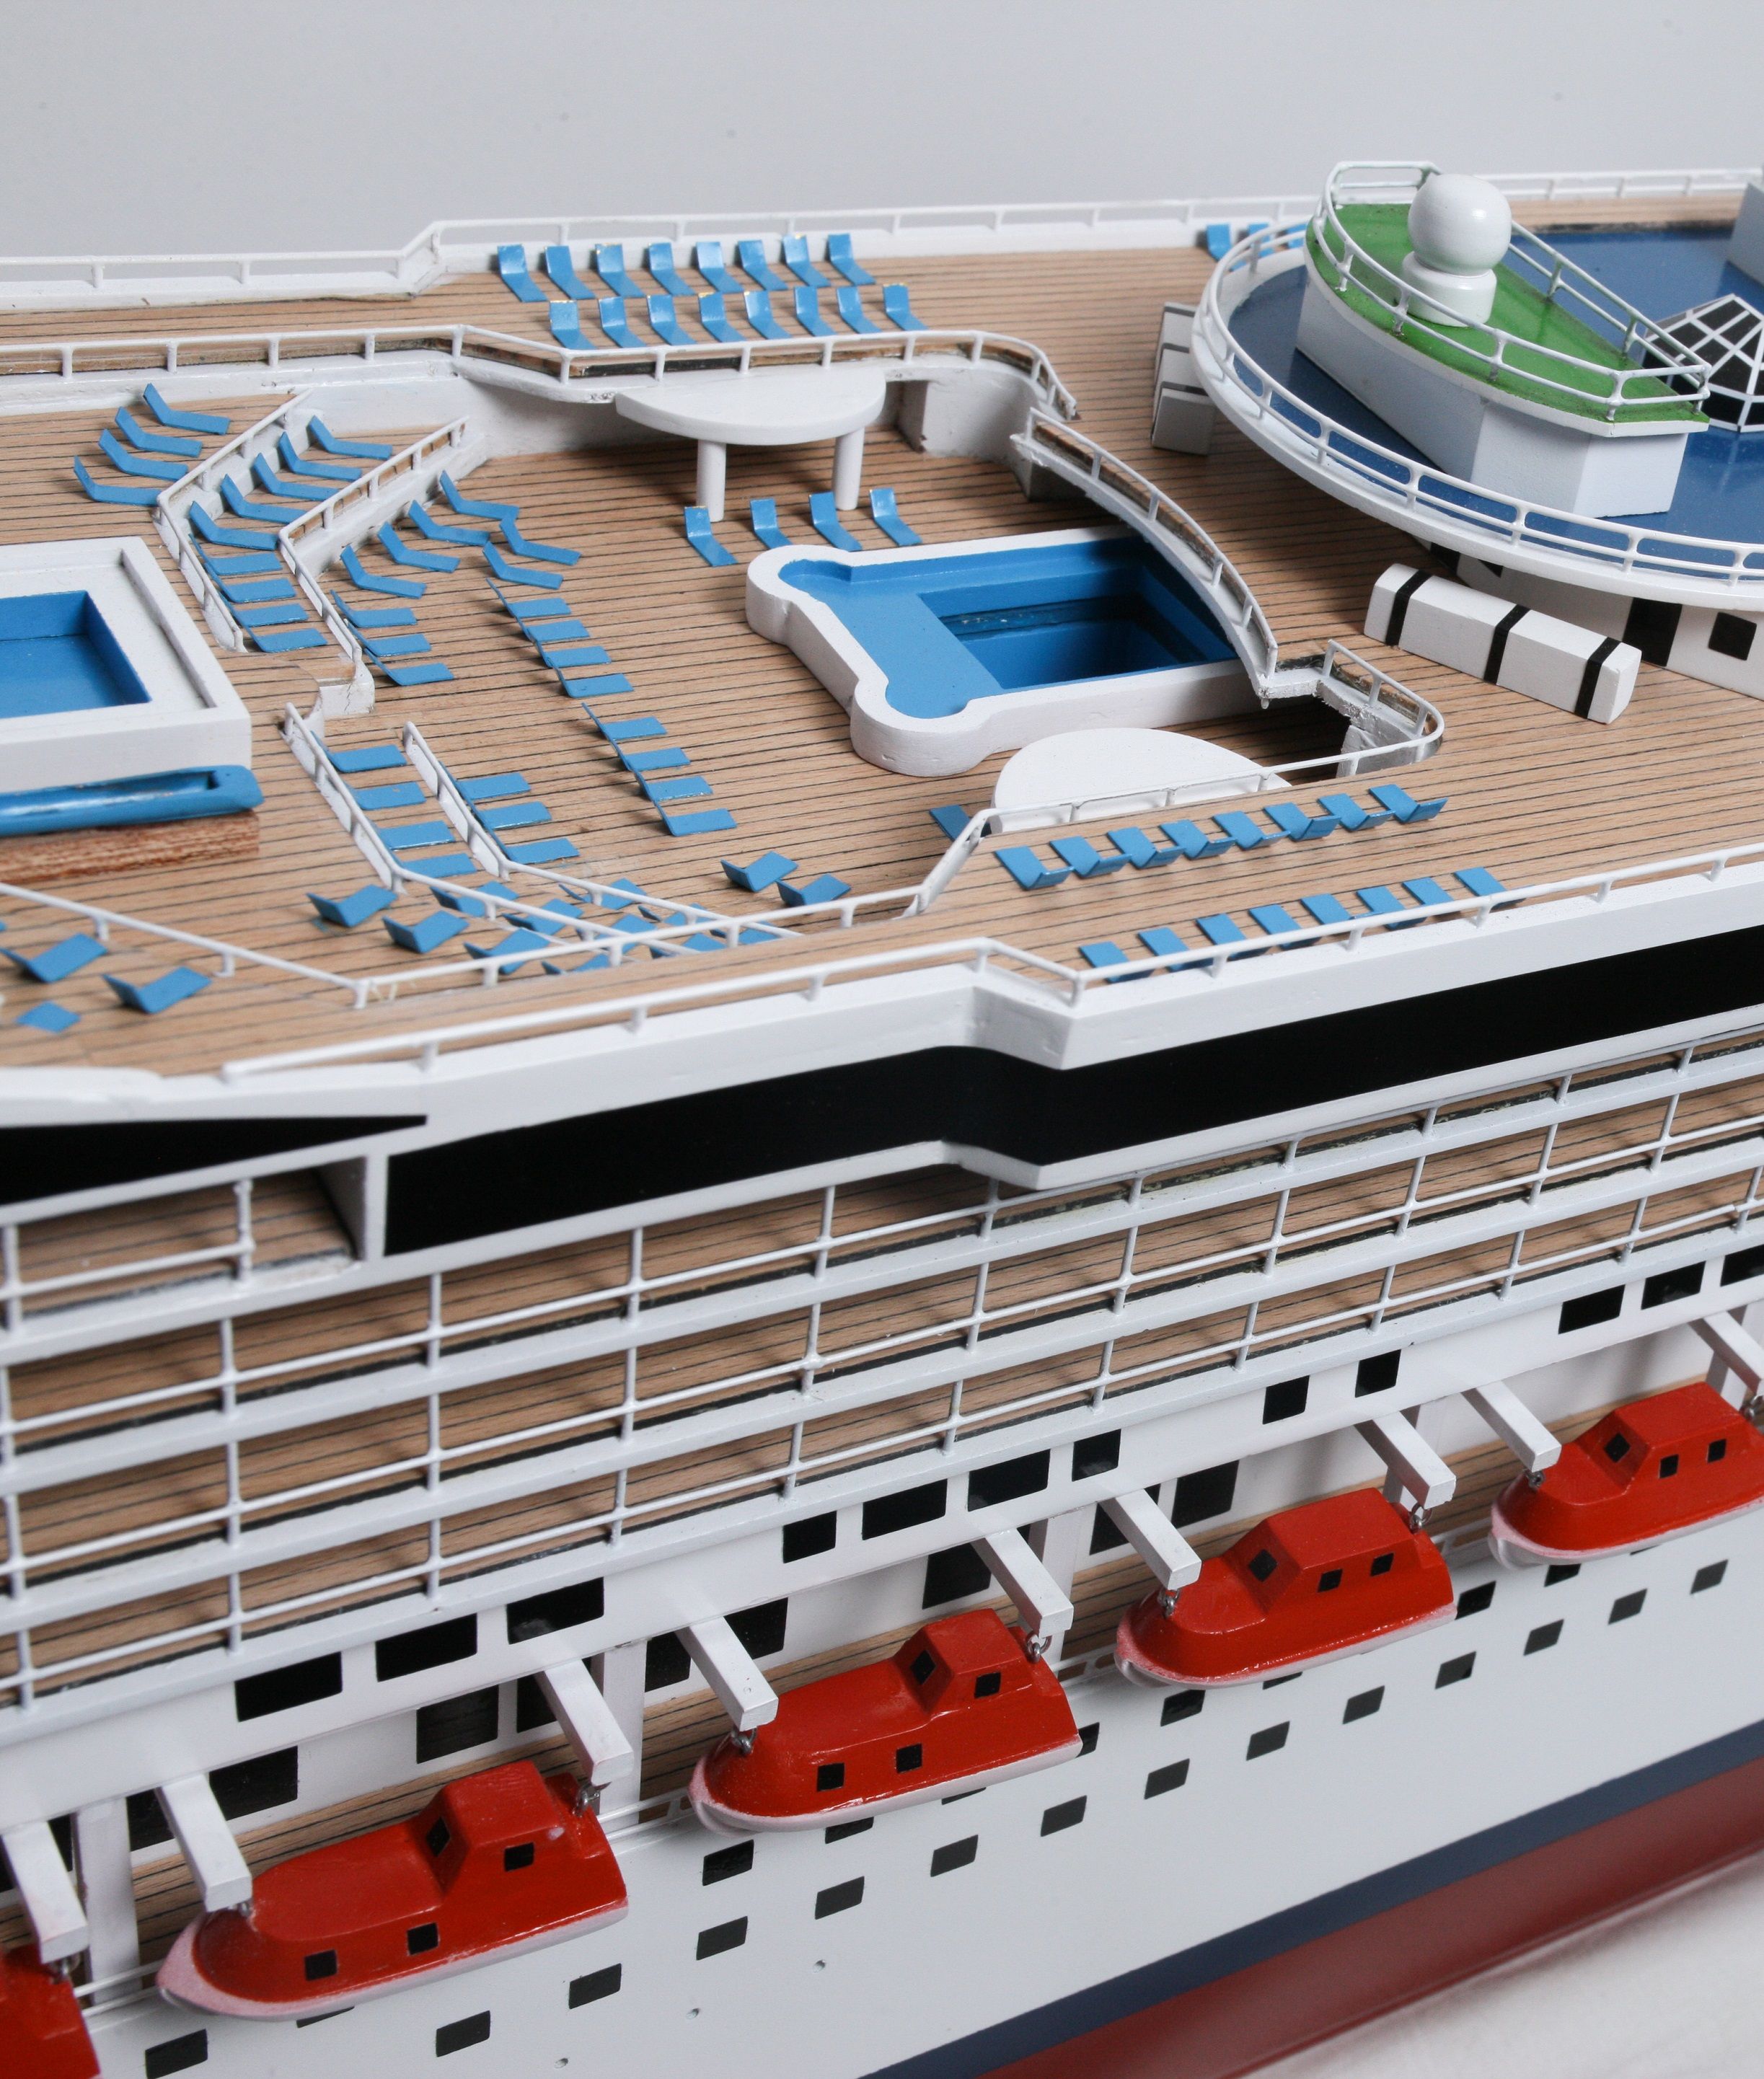 Carnival Freedom Cruise Vessel Model Boat